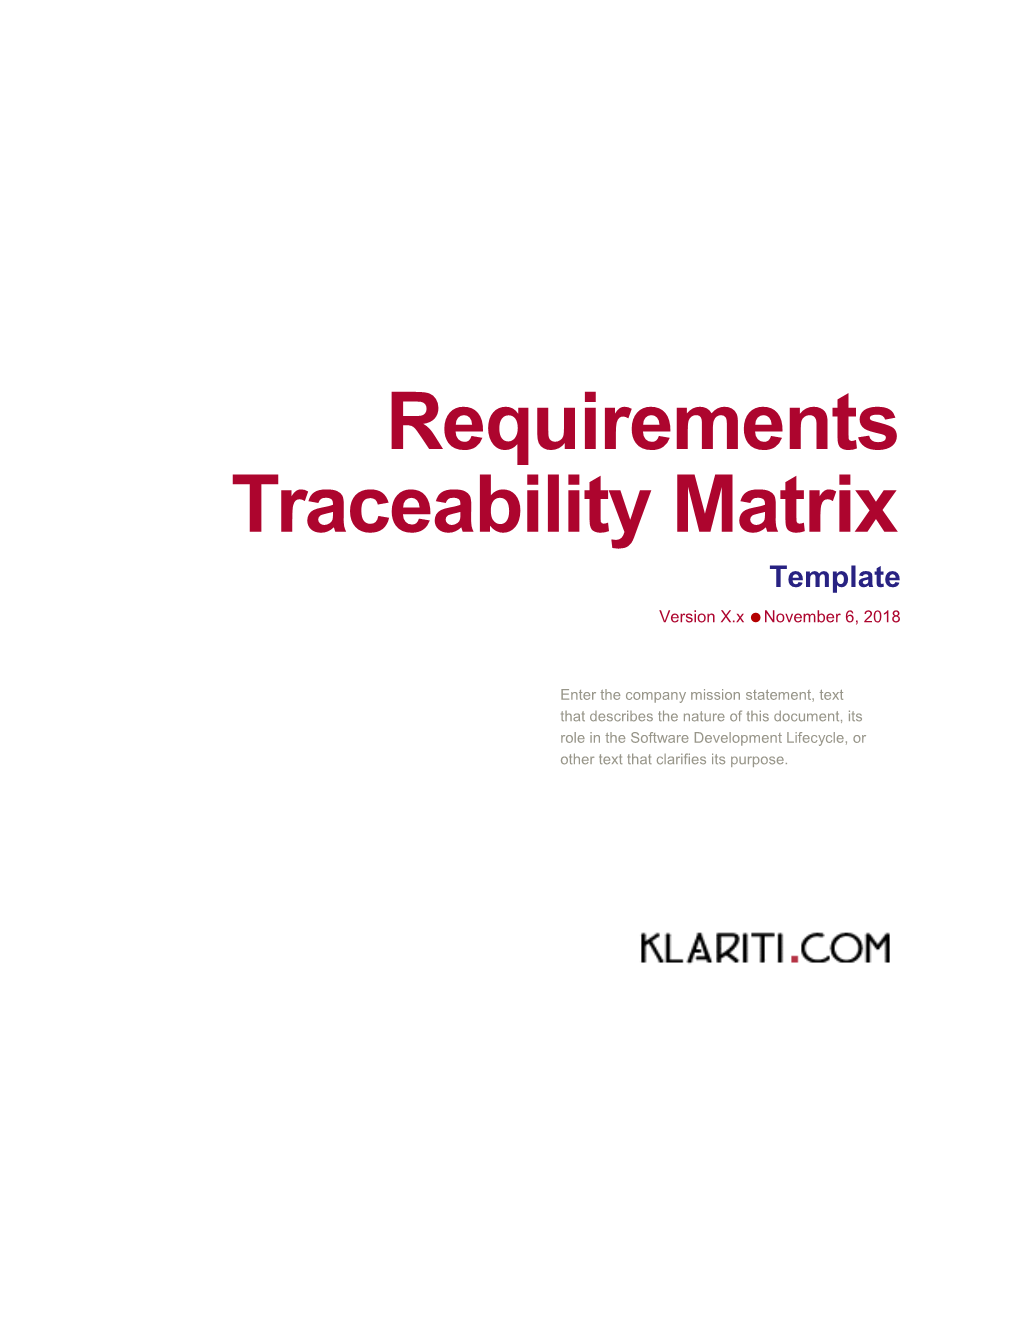 Requirements Traceability Matrix